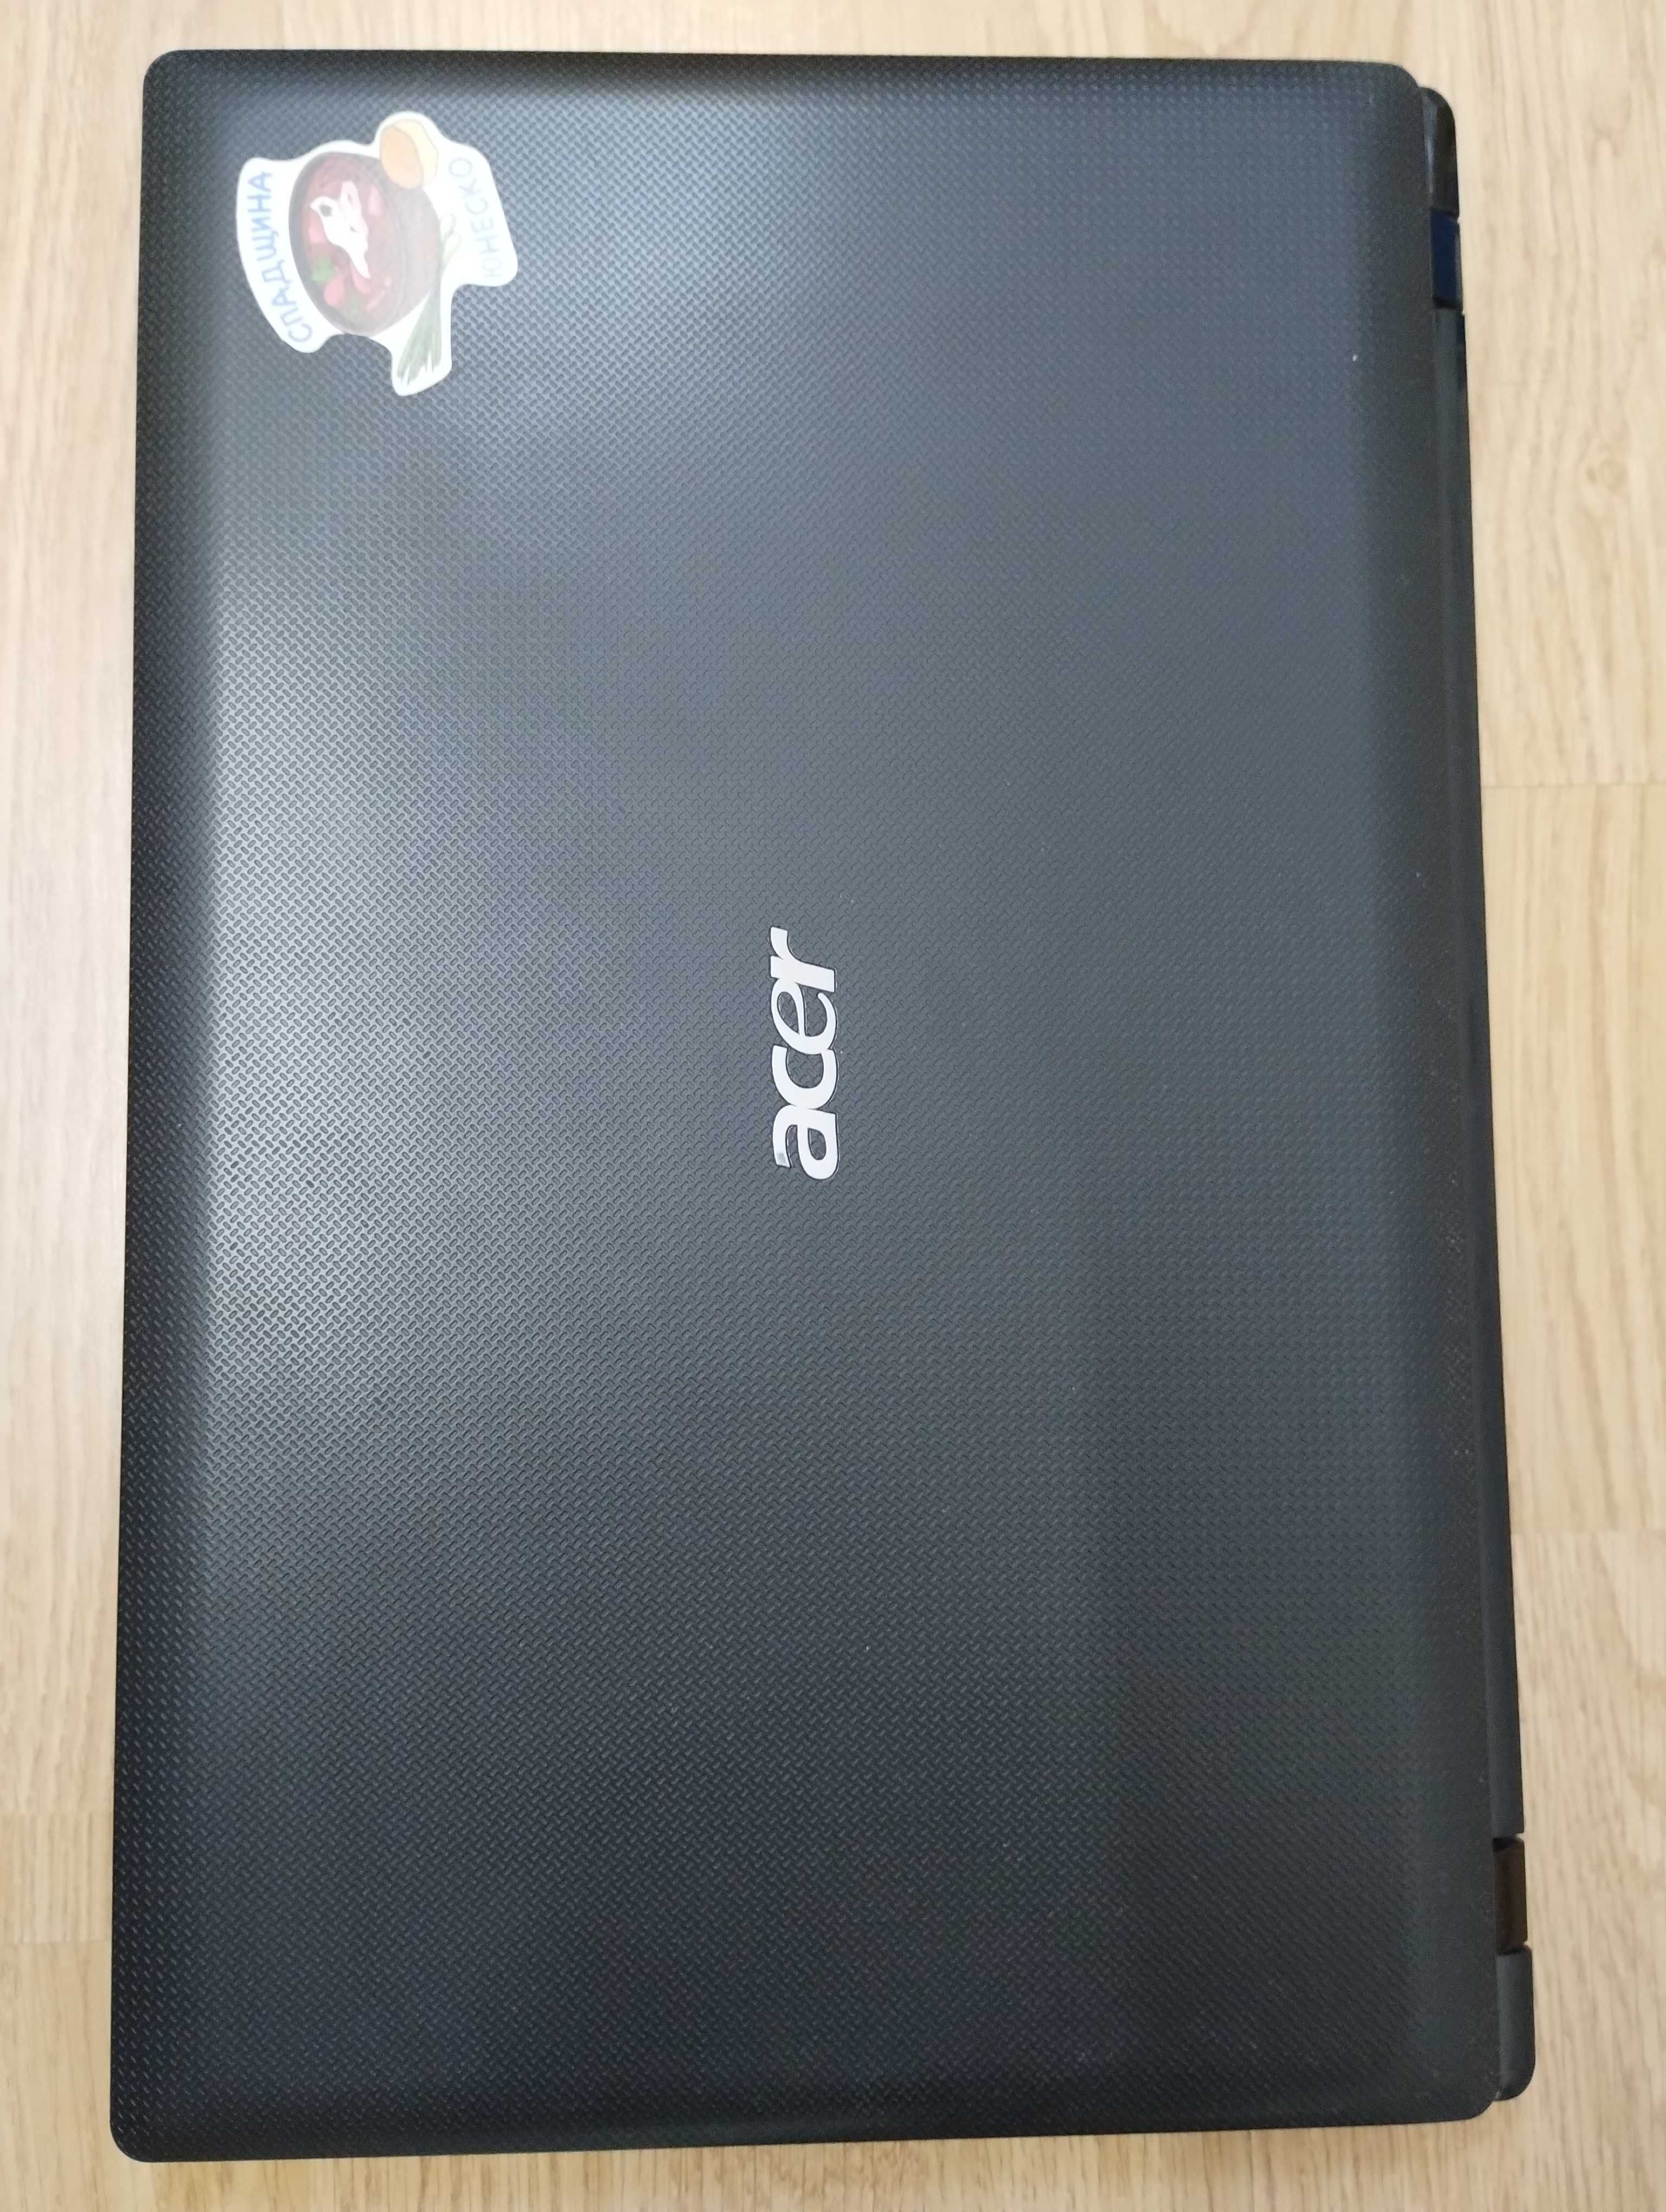 Ноутбук Acer Aspire 7552G